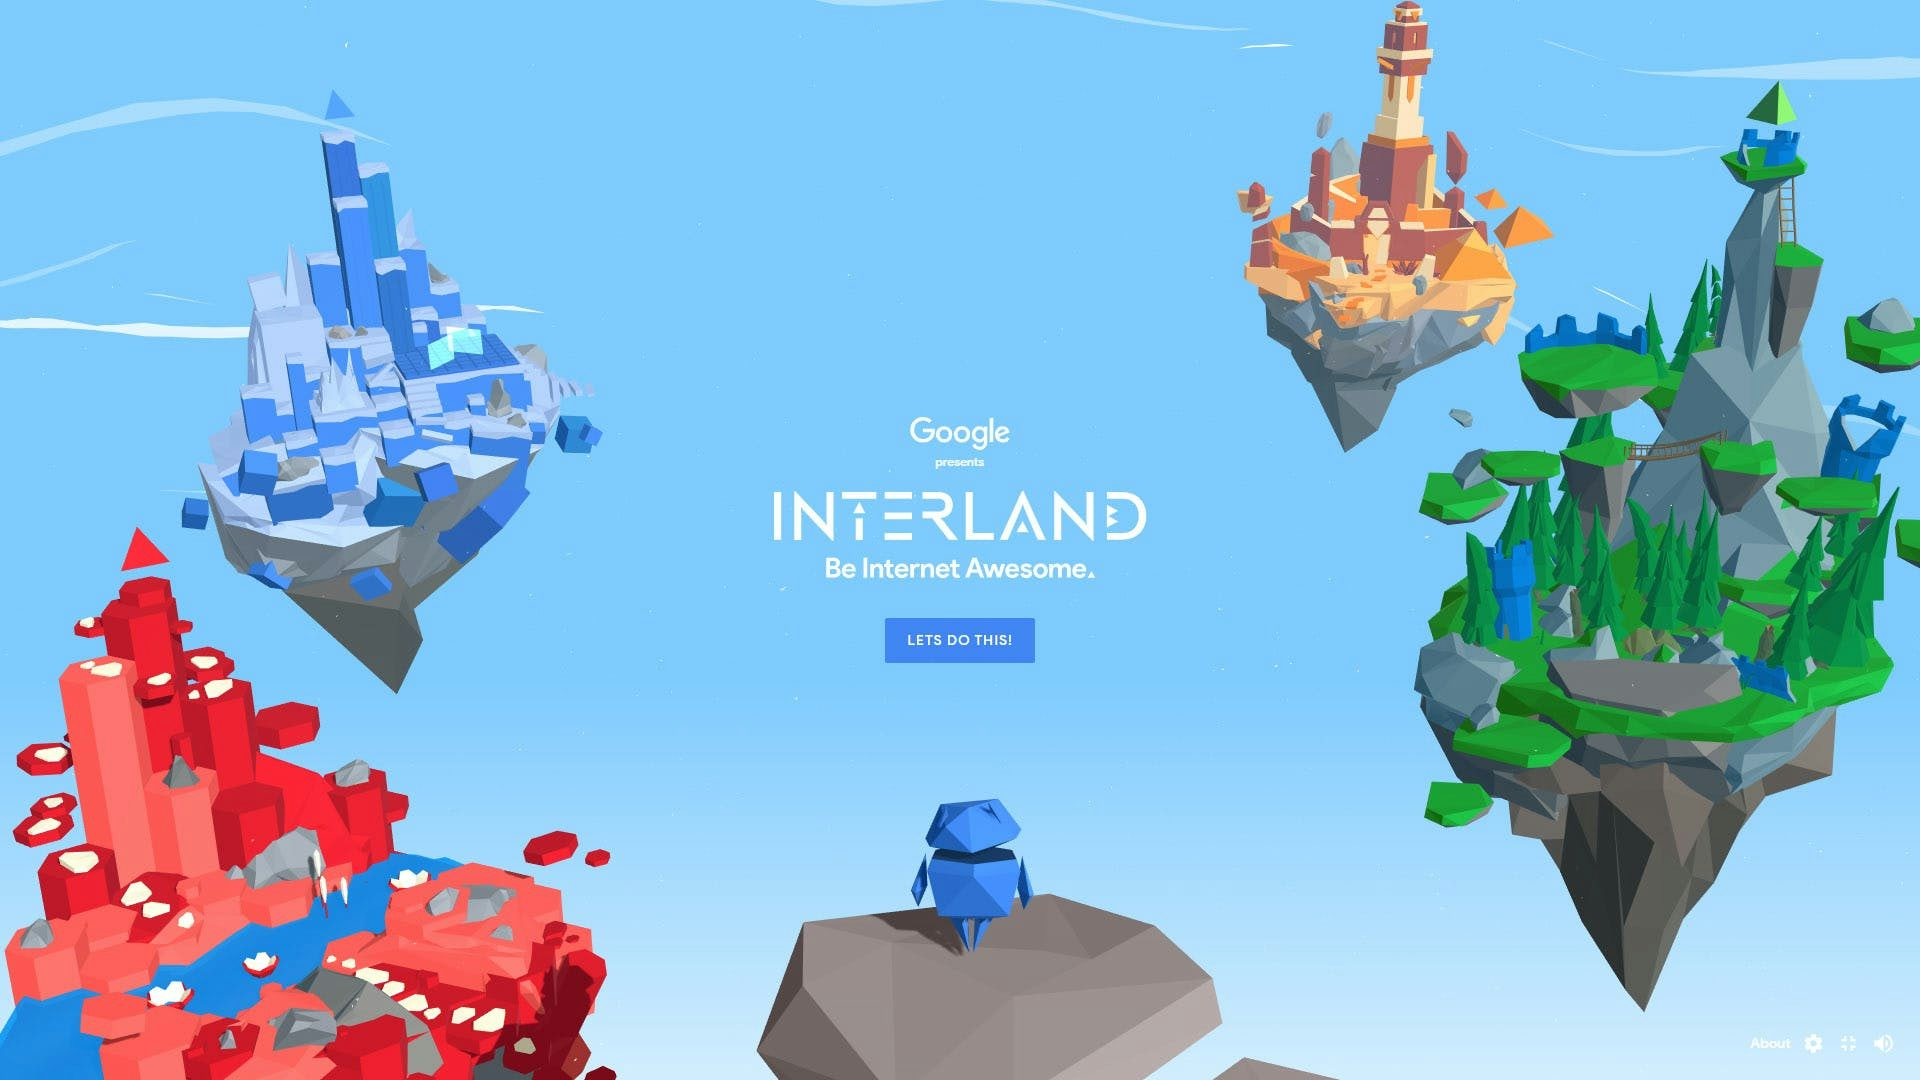 Google Interland start screen with playful environment